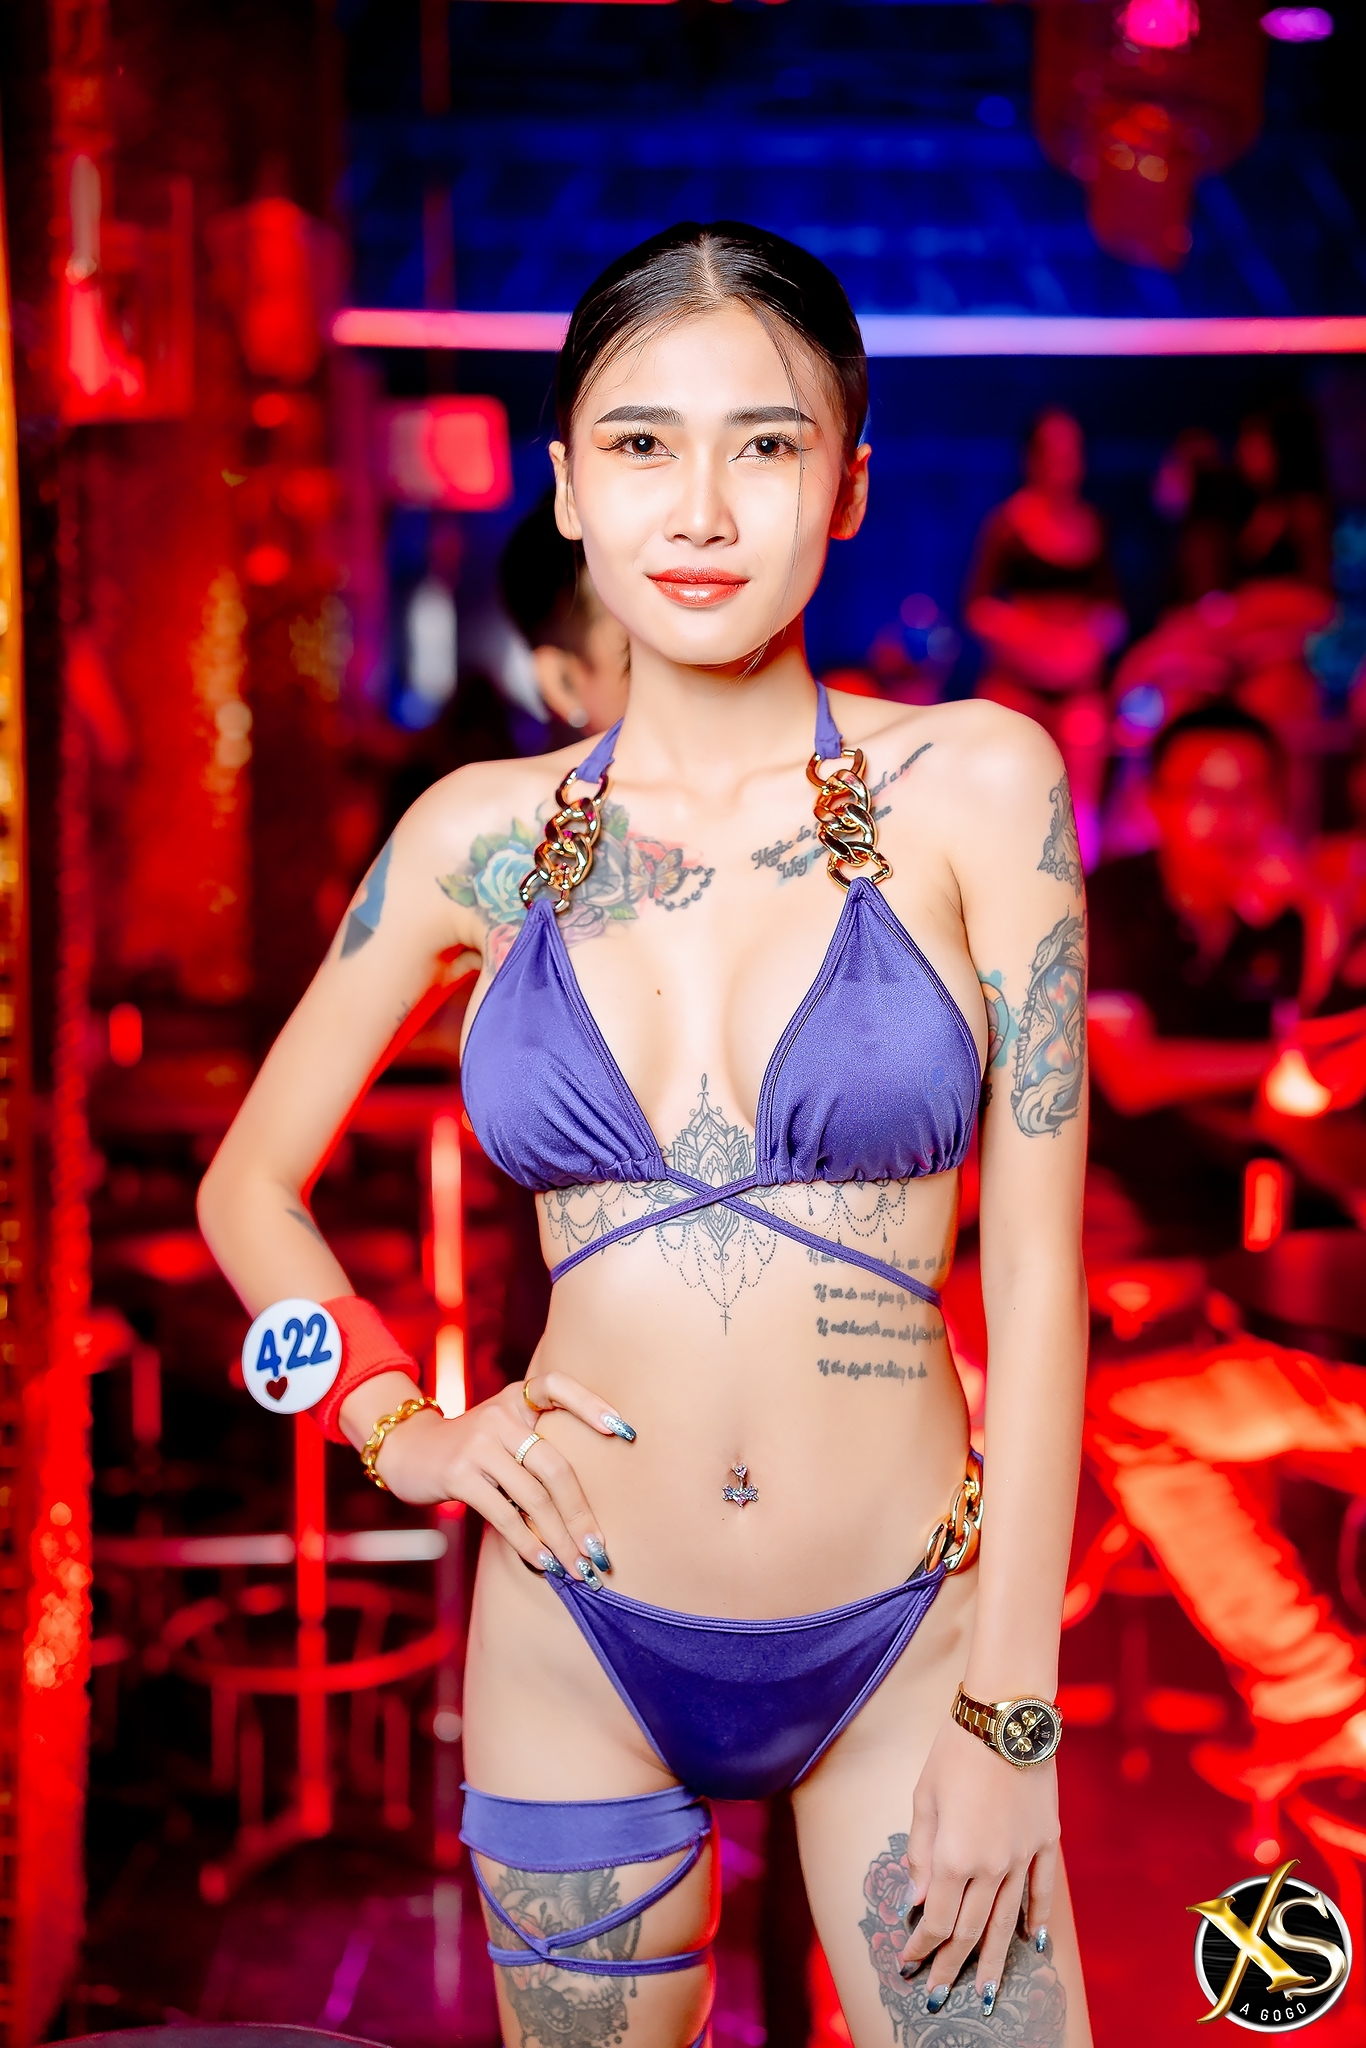 Genuine Thai Bar Girl